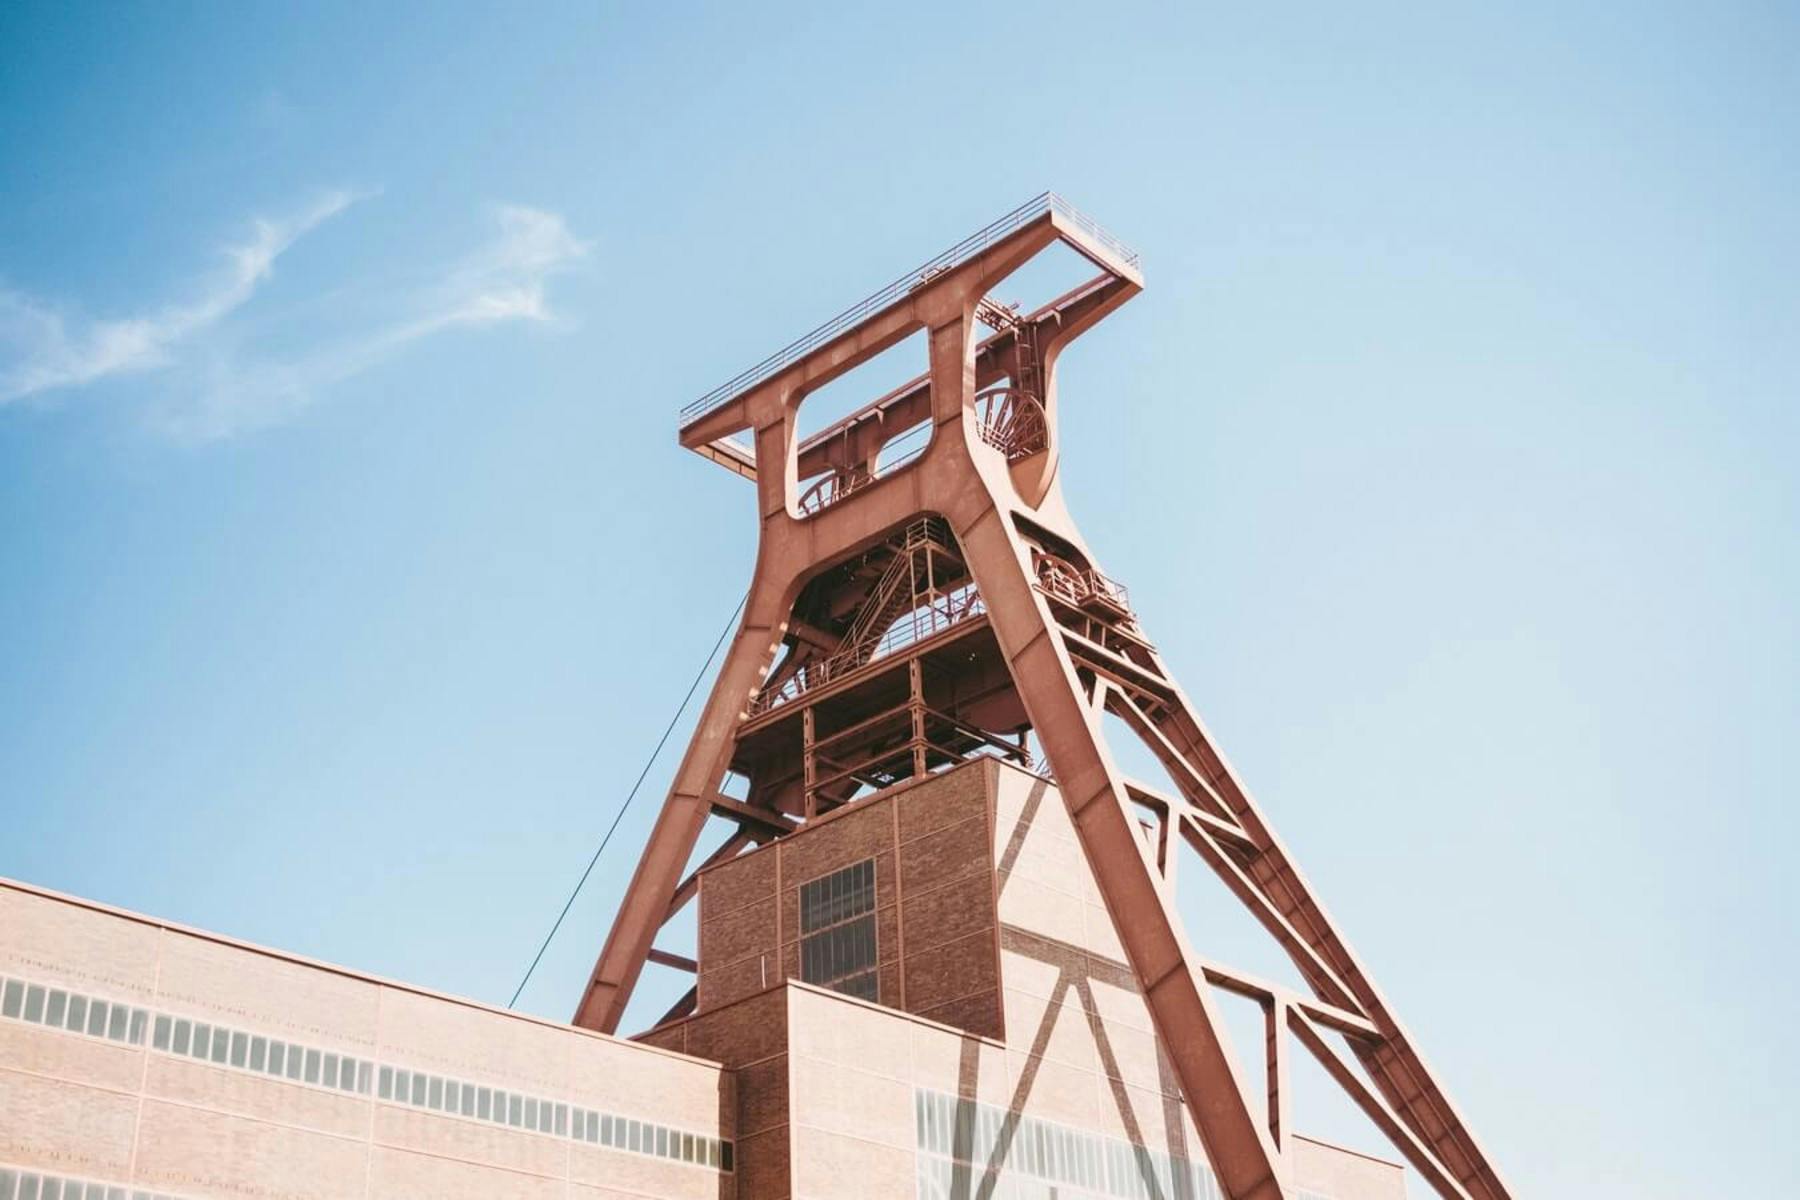 Sightseeings in Essen: The Zollverein Coal Mine Industrial Complex